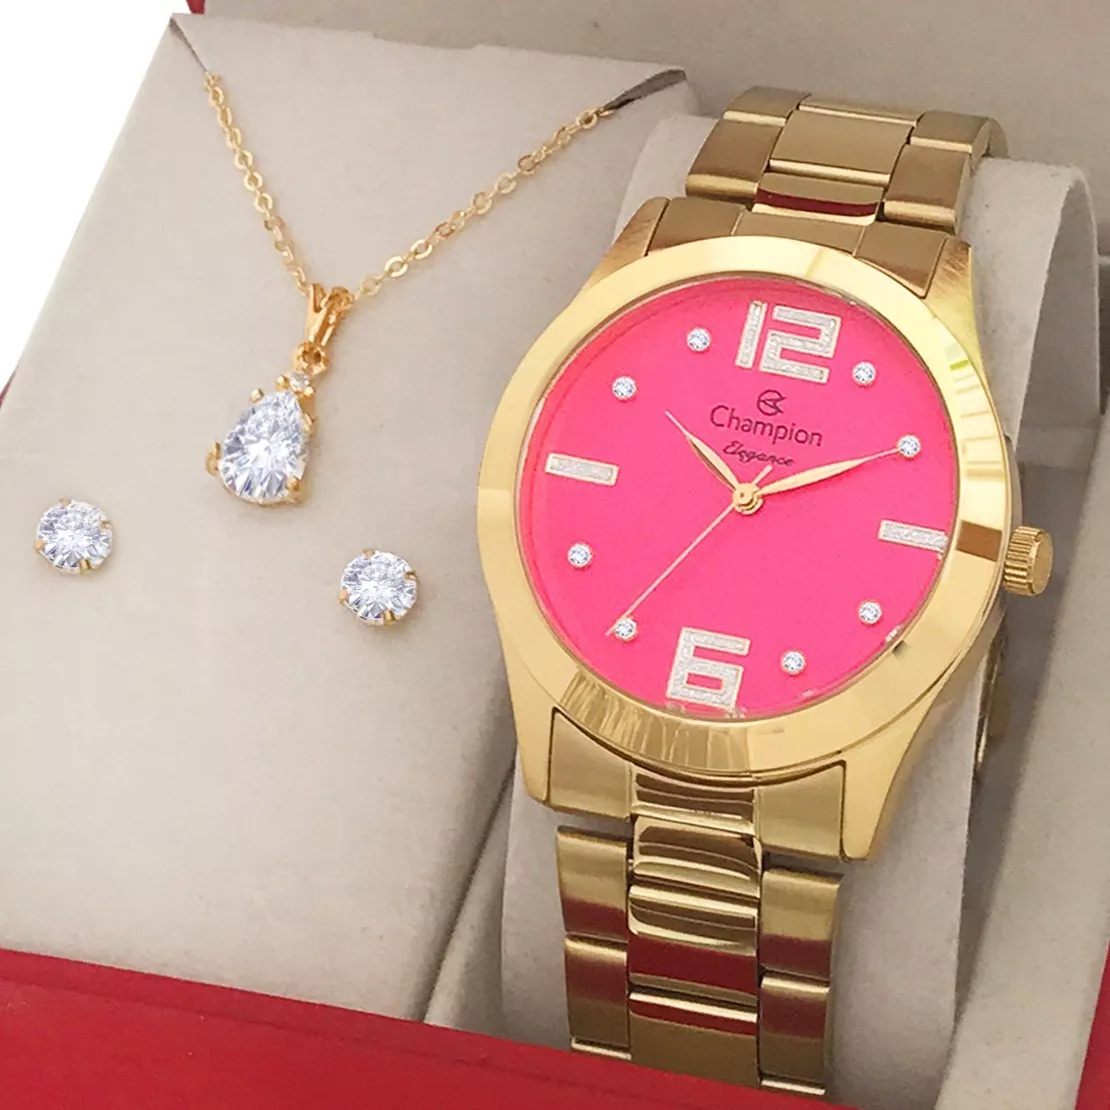 Relógio Champion Feminino Dourado Rosa + Embalagem Presente